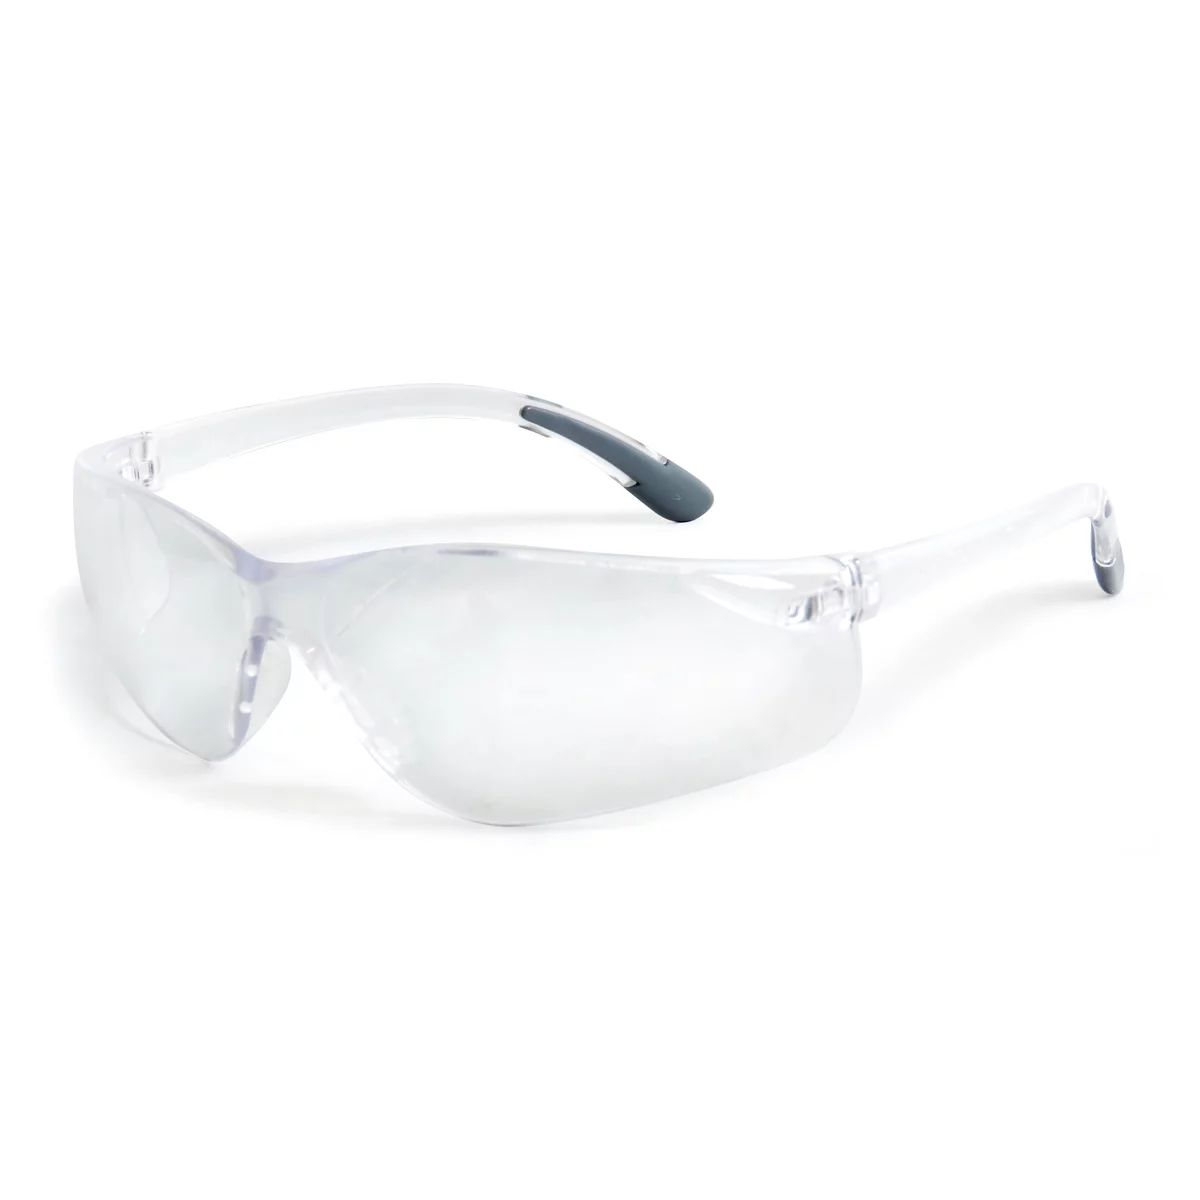 Hyper Tough Anti-Fog Safety Glasses 100% UV Blocking, Meet ANSI z87.1 Impact Resistance | Walmart (US)